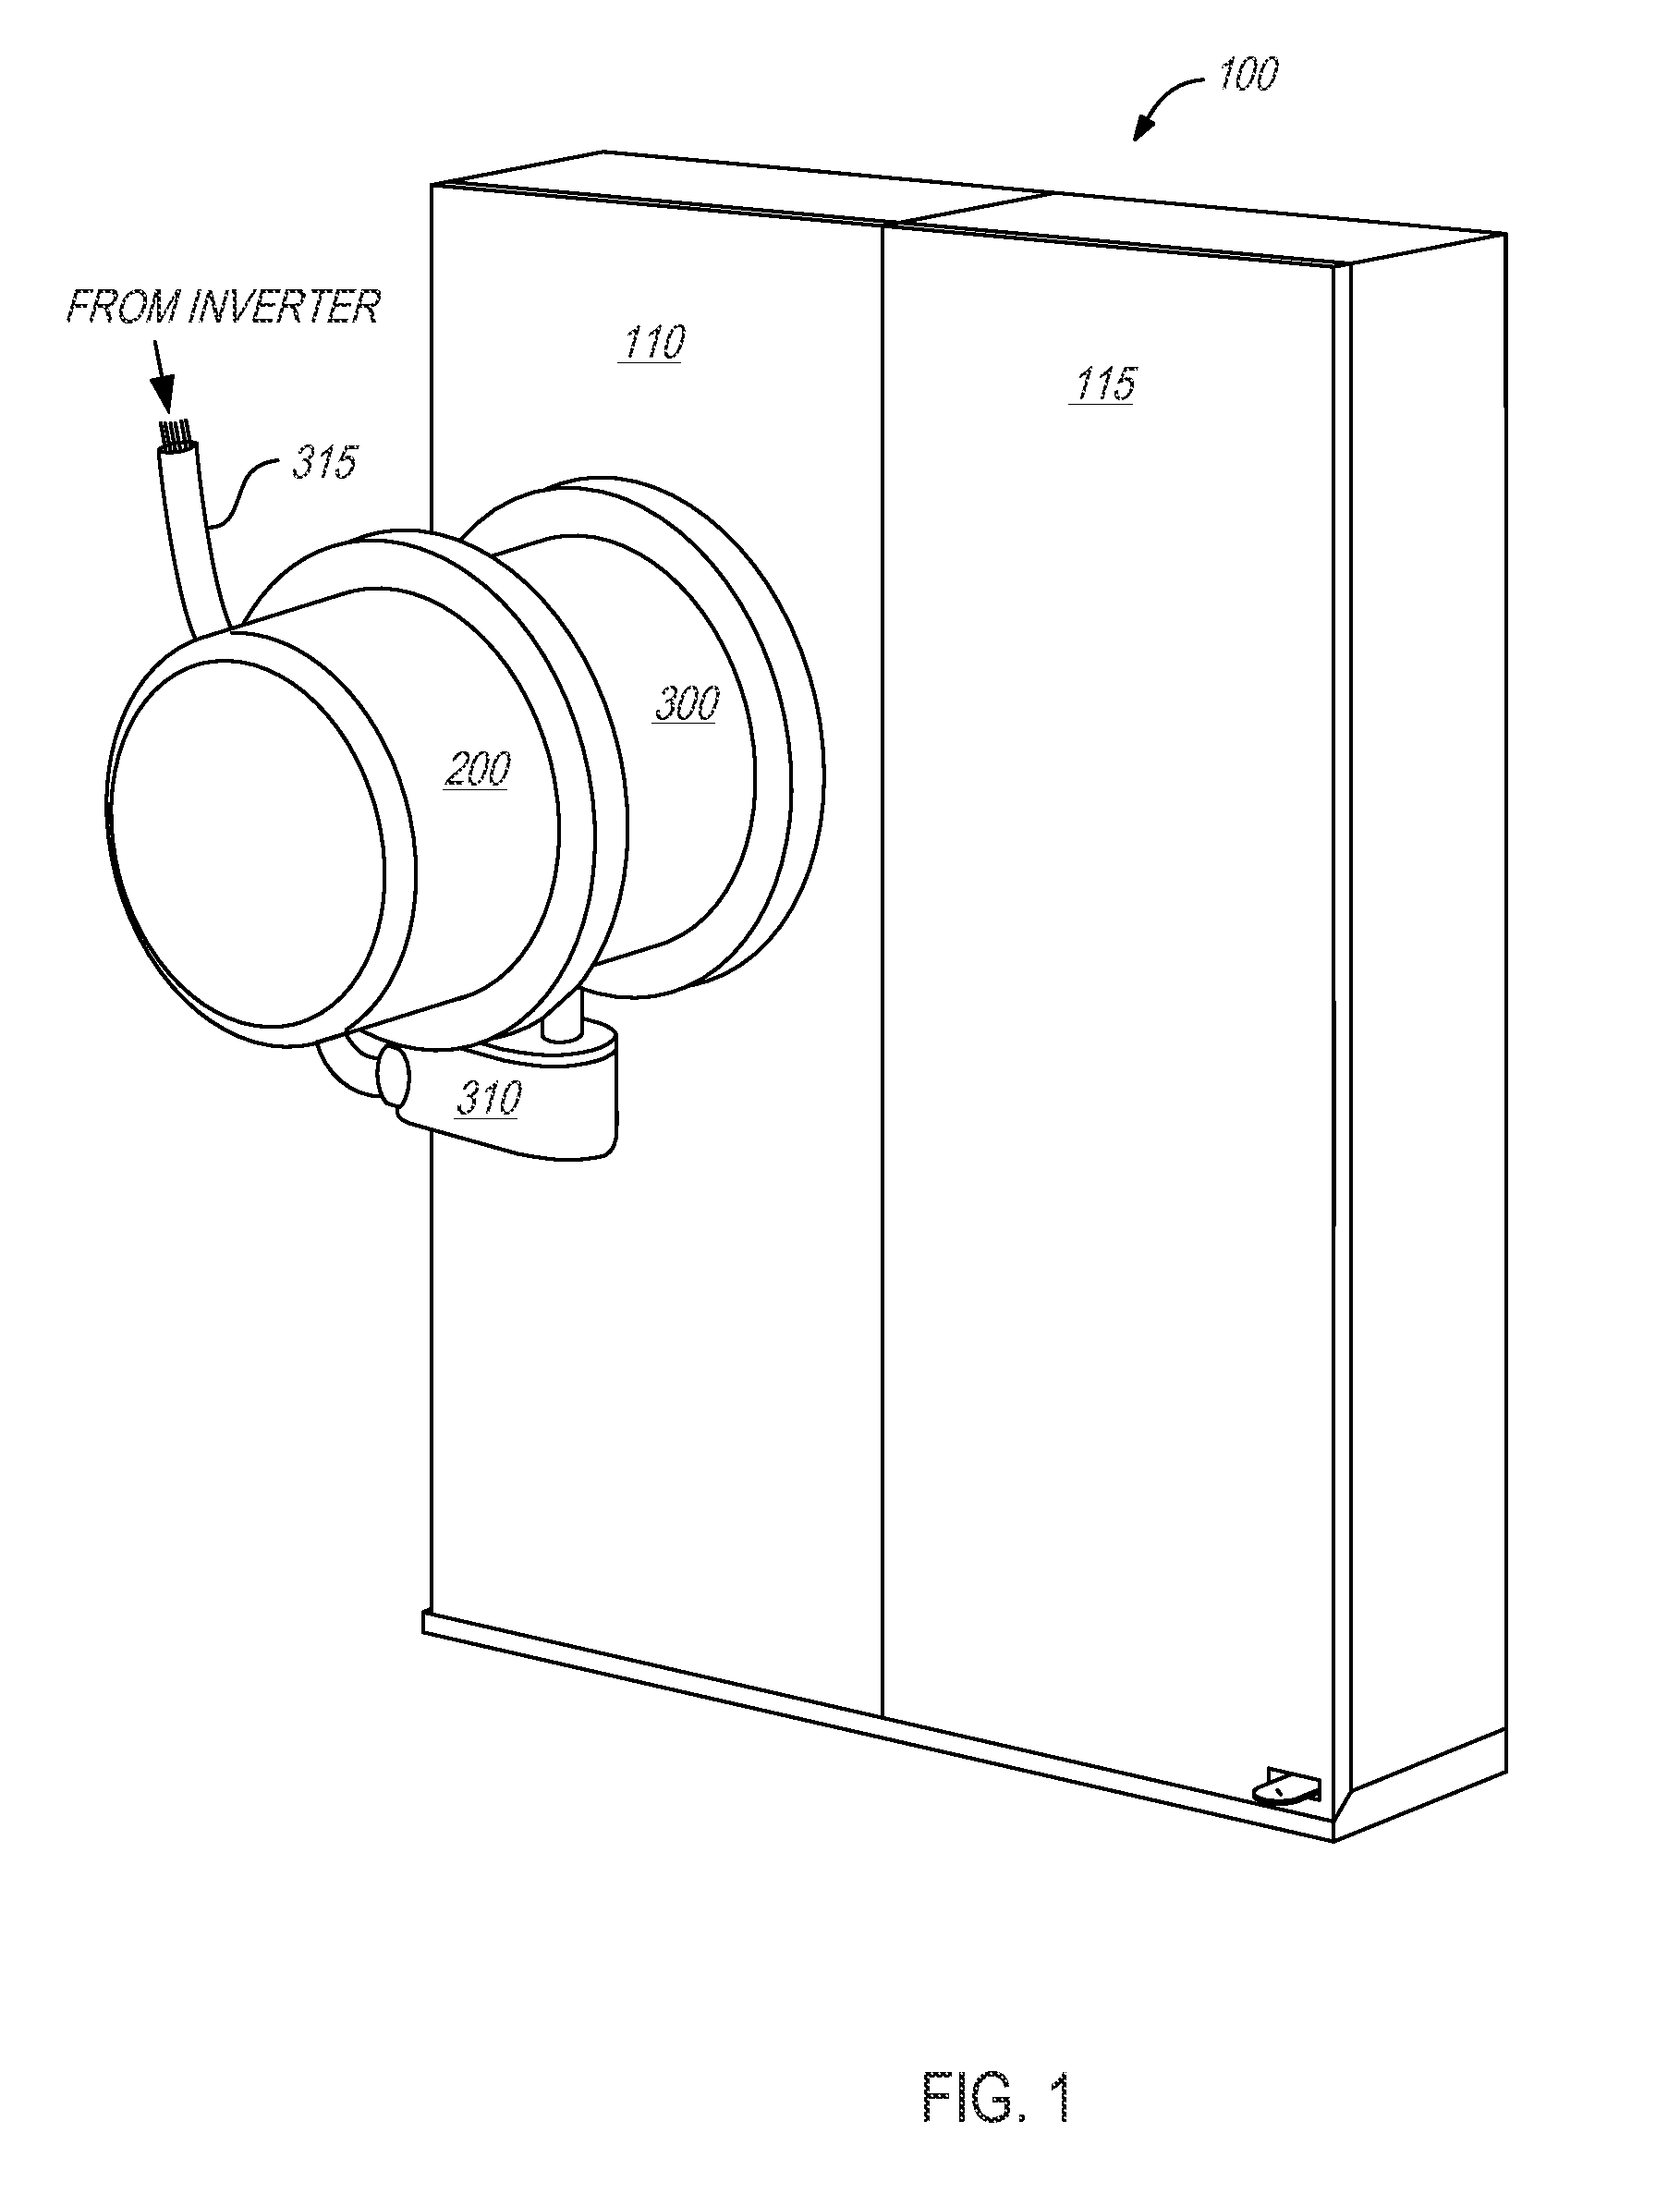 Meter socket adaptor